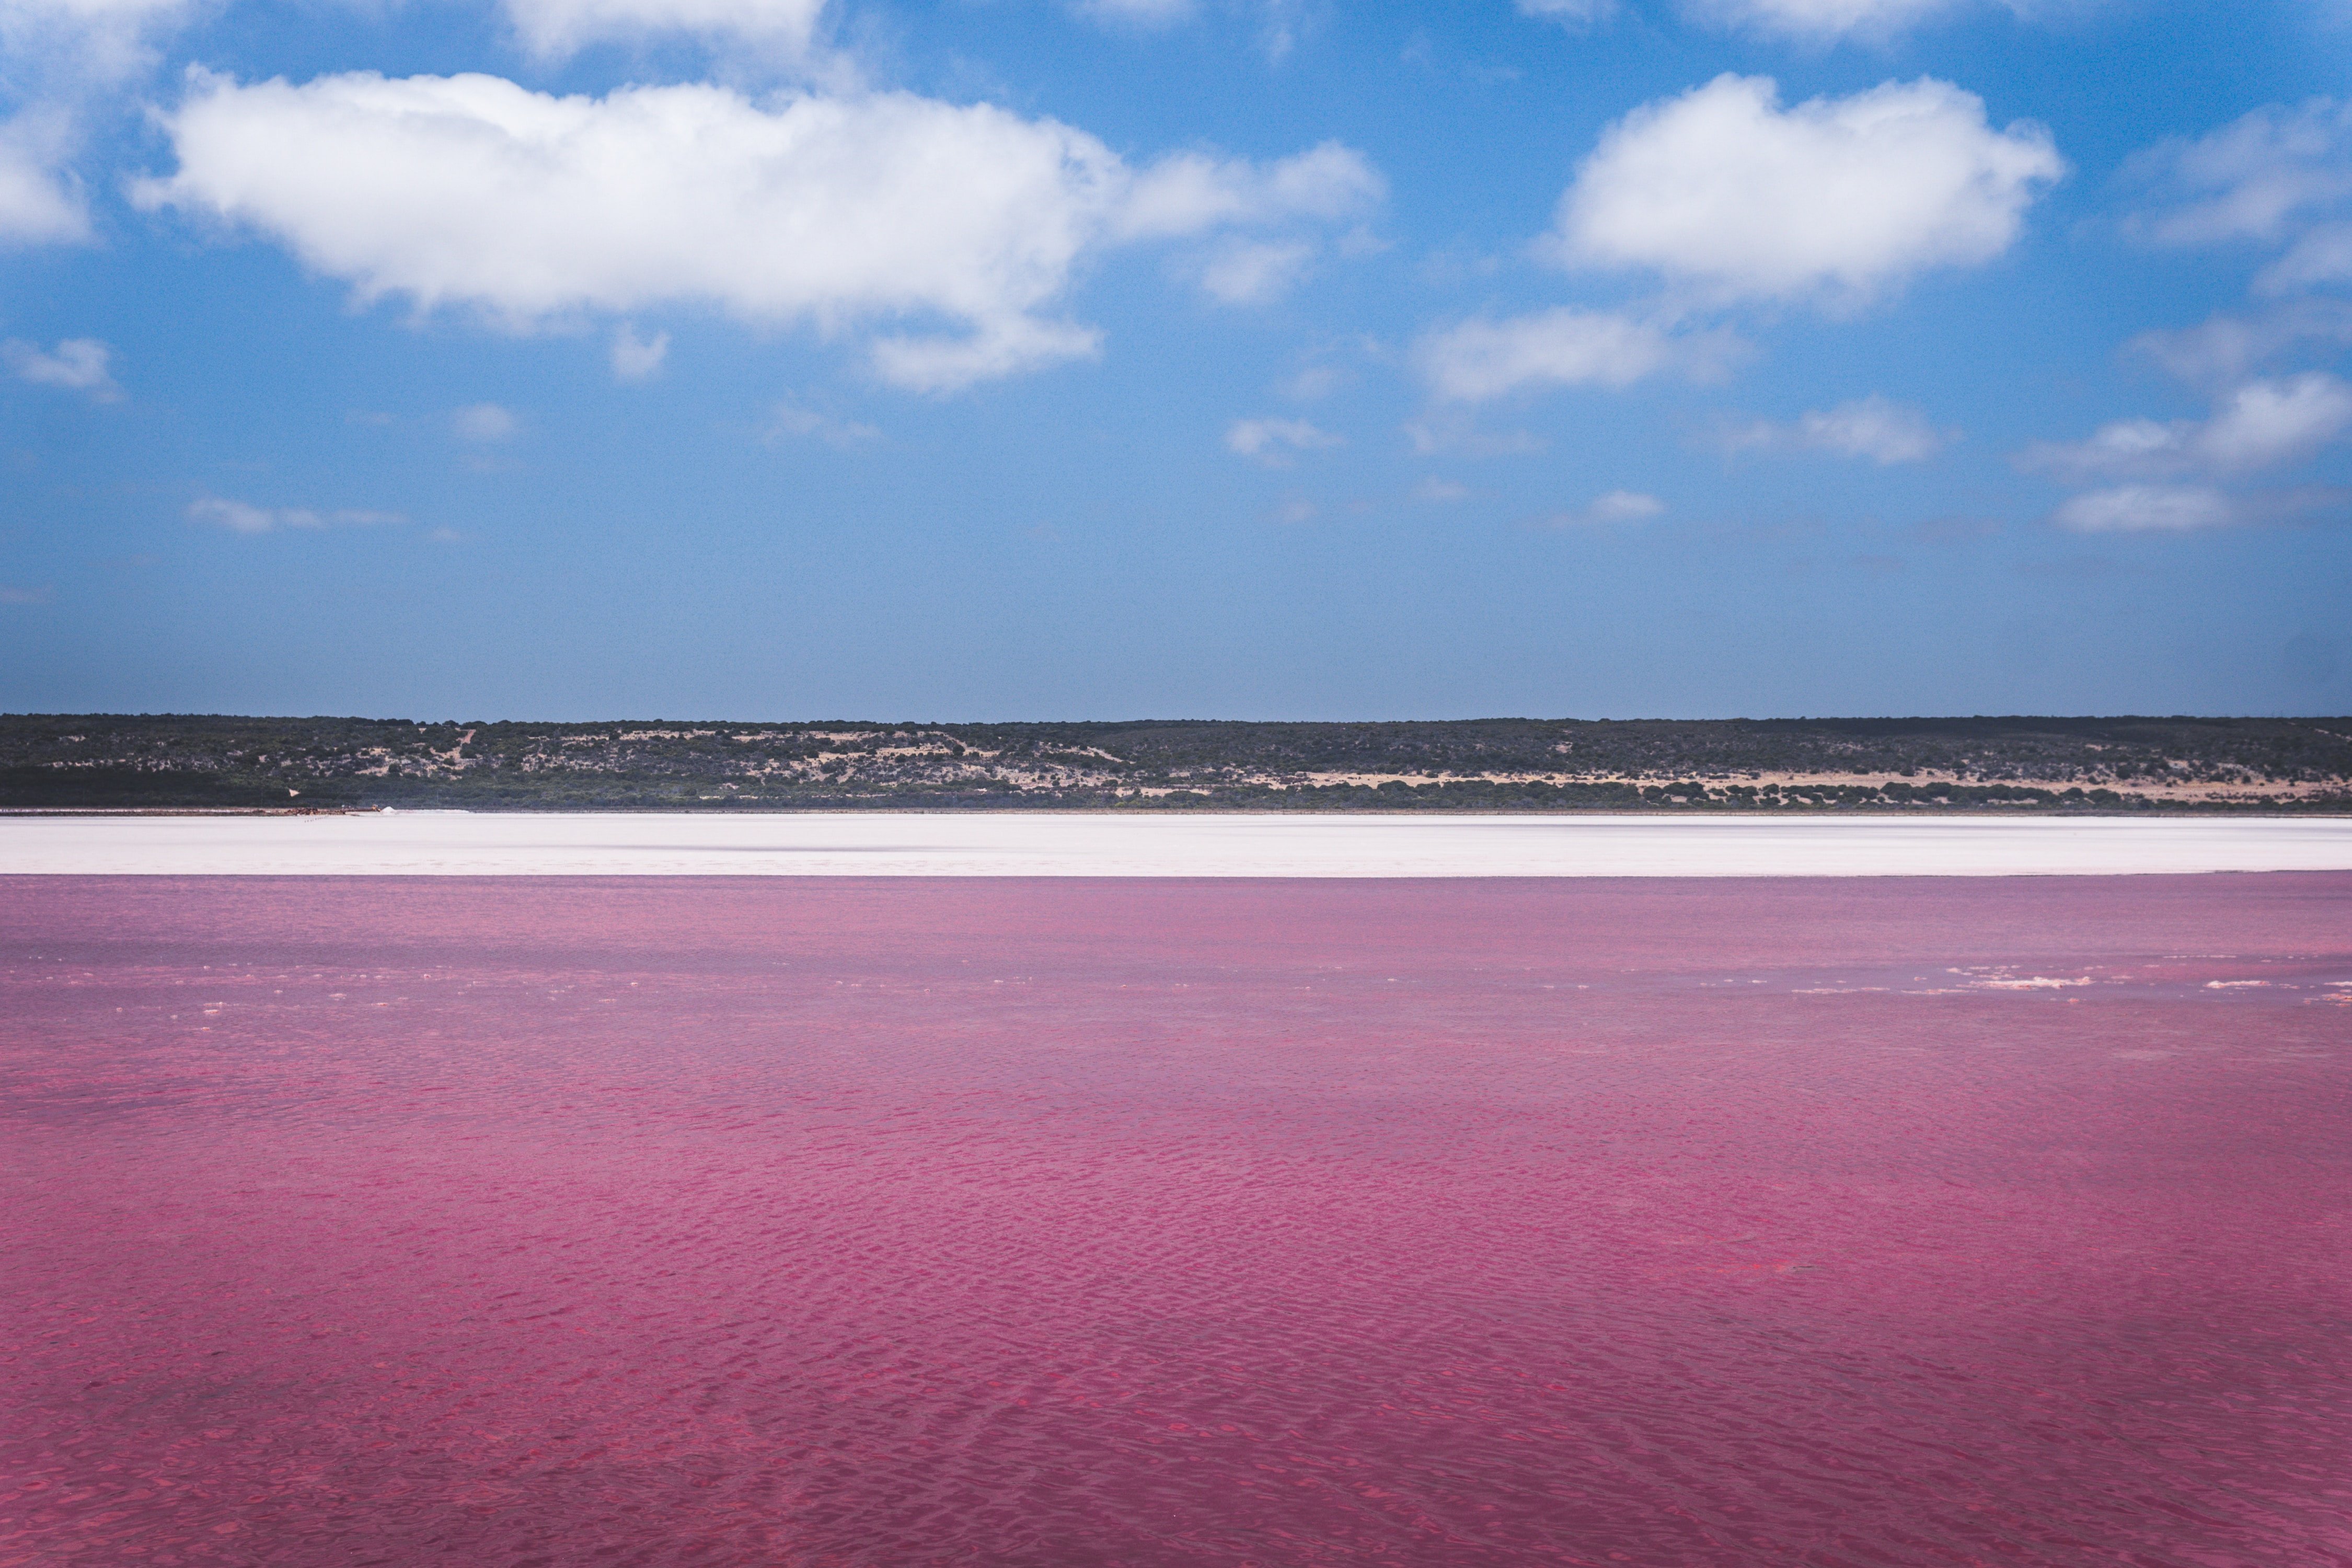 Озеро хиллер австралия. Озеро Хиллиер, Австралия. Озеро Ретба Сенегал. Розовое озеро Хиллер Австралия. Озеро Хиллиер (Lake hillier), Австралия.